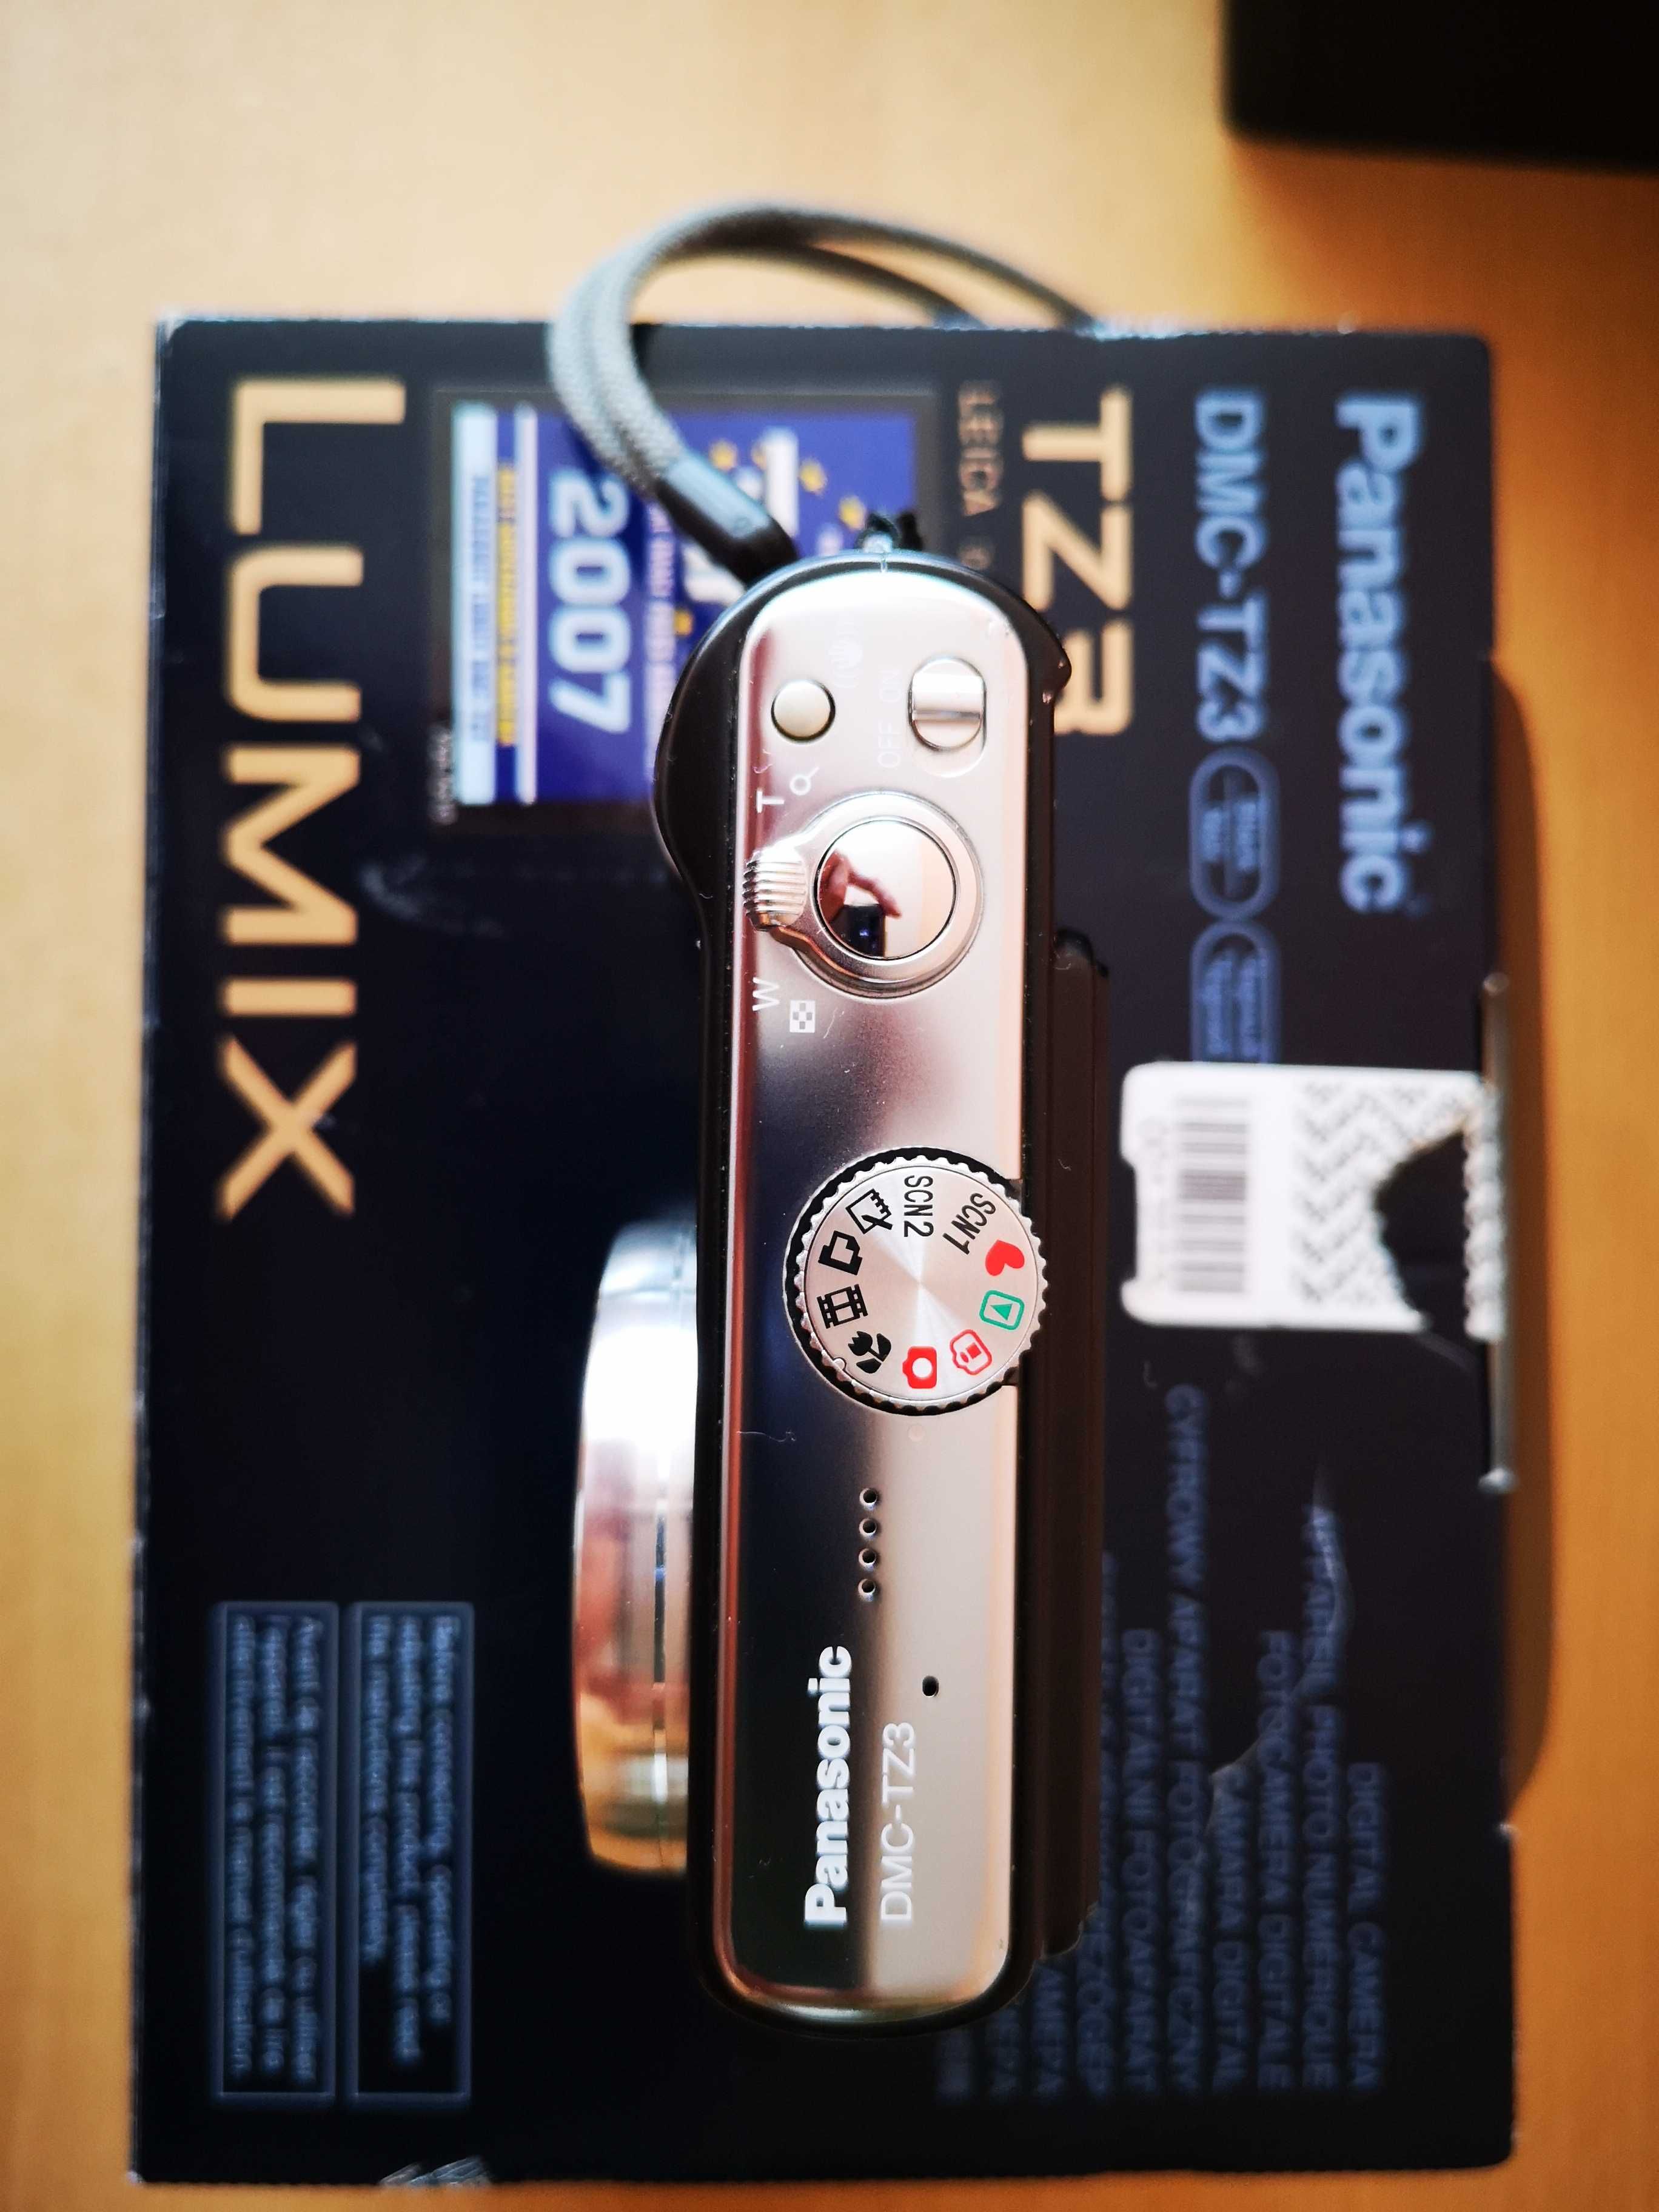 Aparat Panasonic TZ3 Lumix 10xmega optical zoom